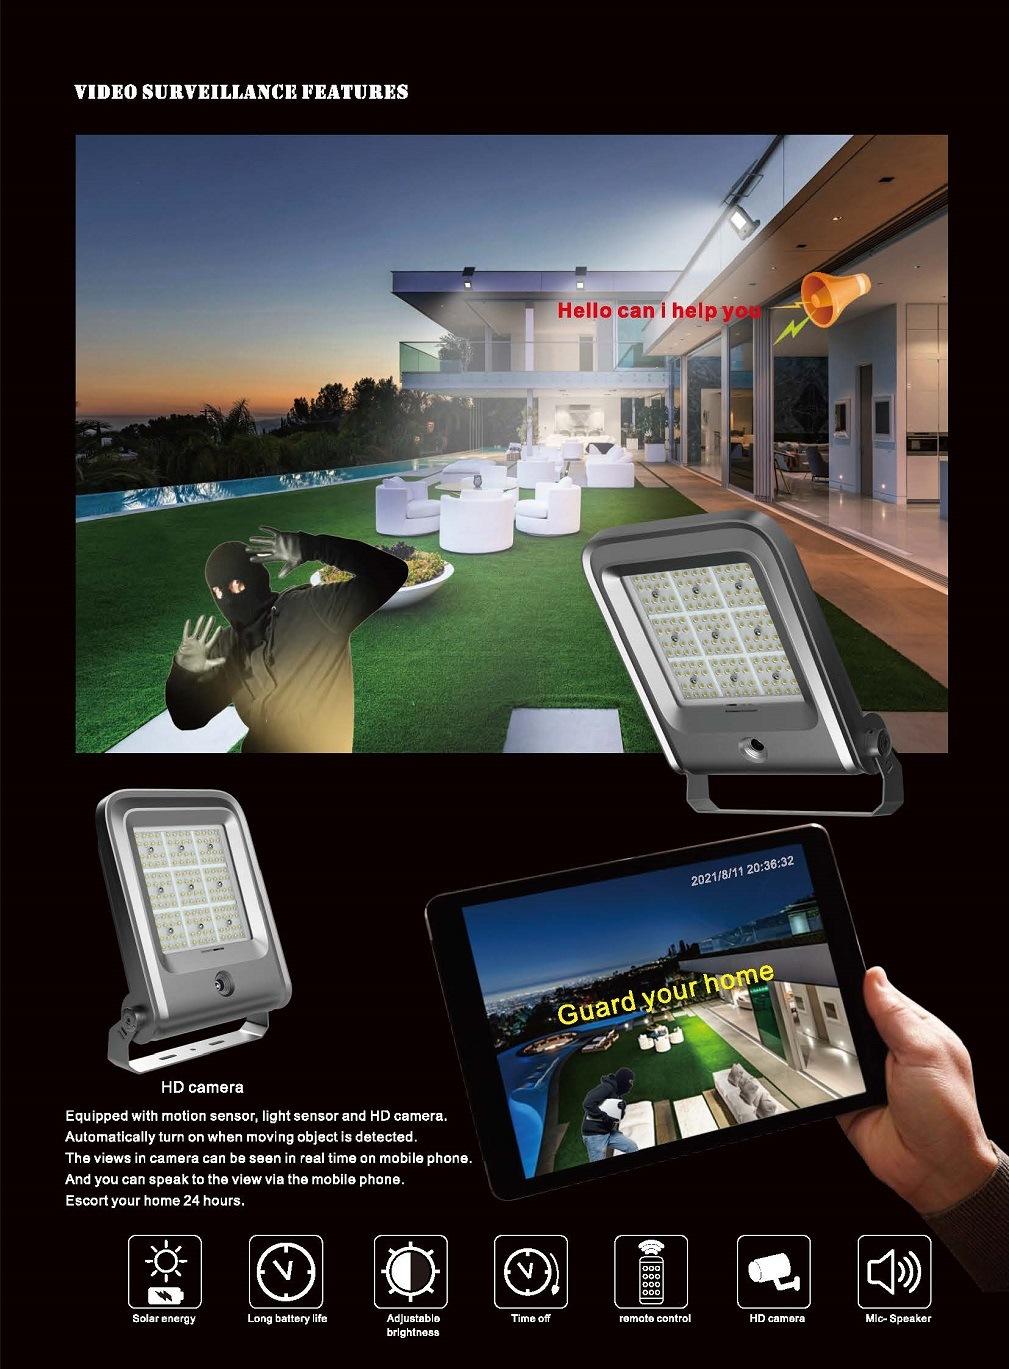 Outdoor LED Solar Sound & Light Alarm Light with Motion Sensor